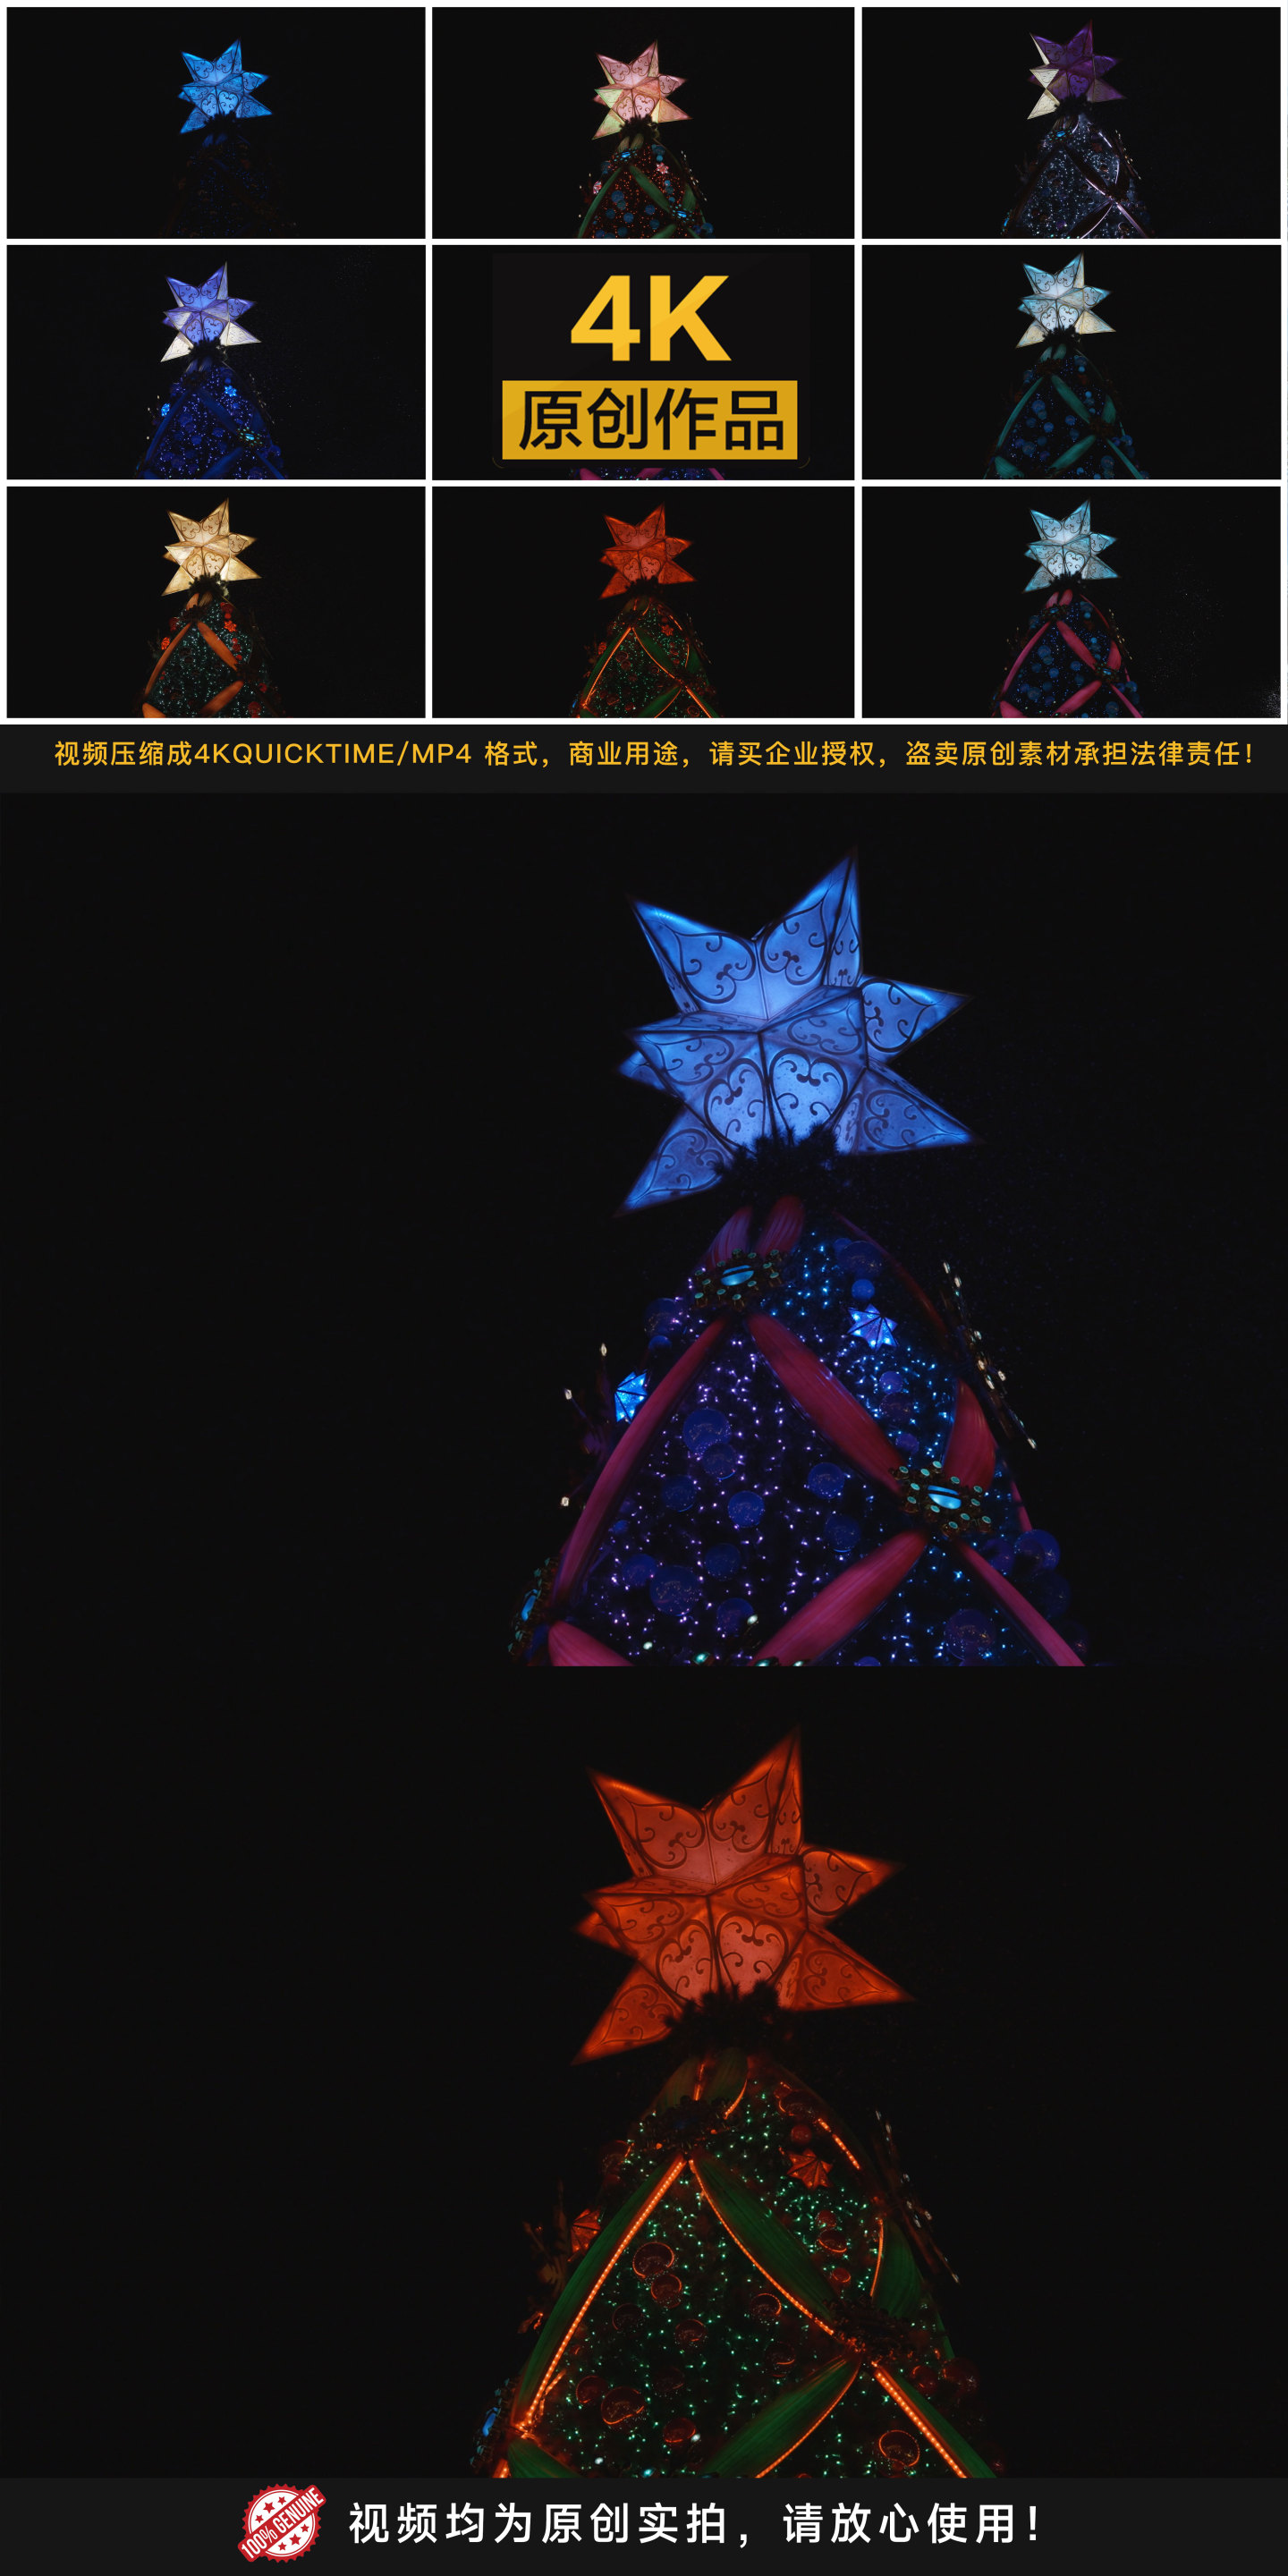 【4K】北京环球影城-圣诞树